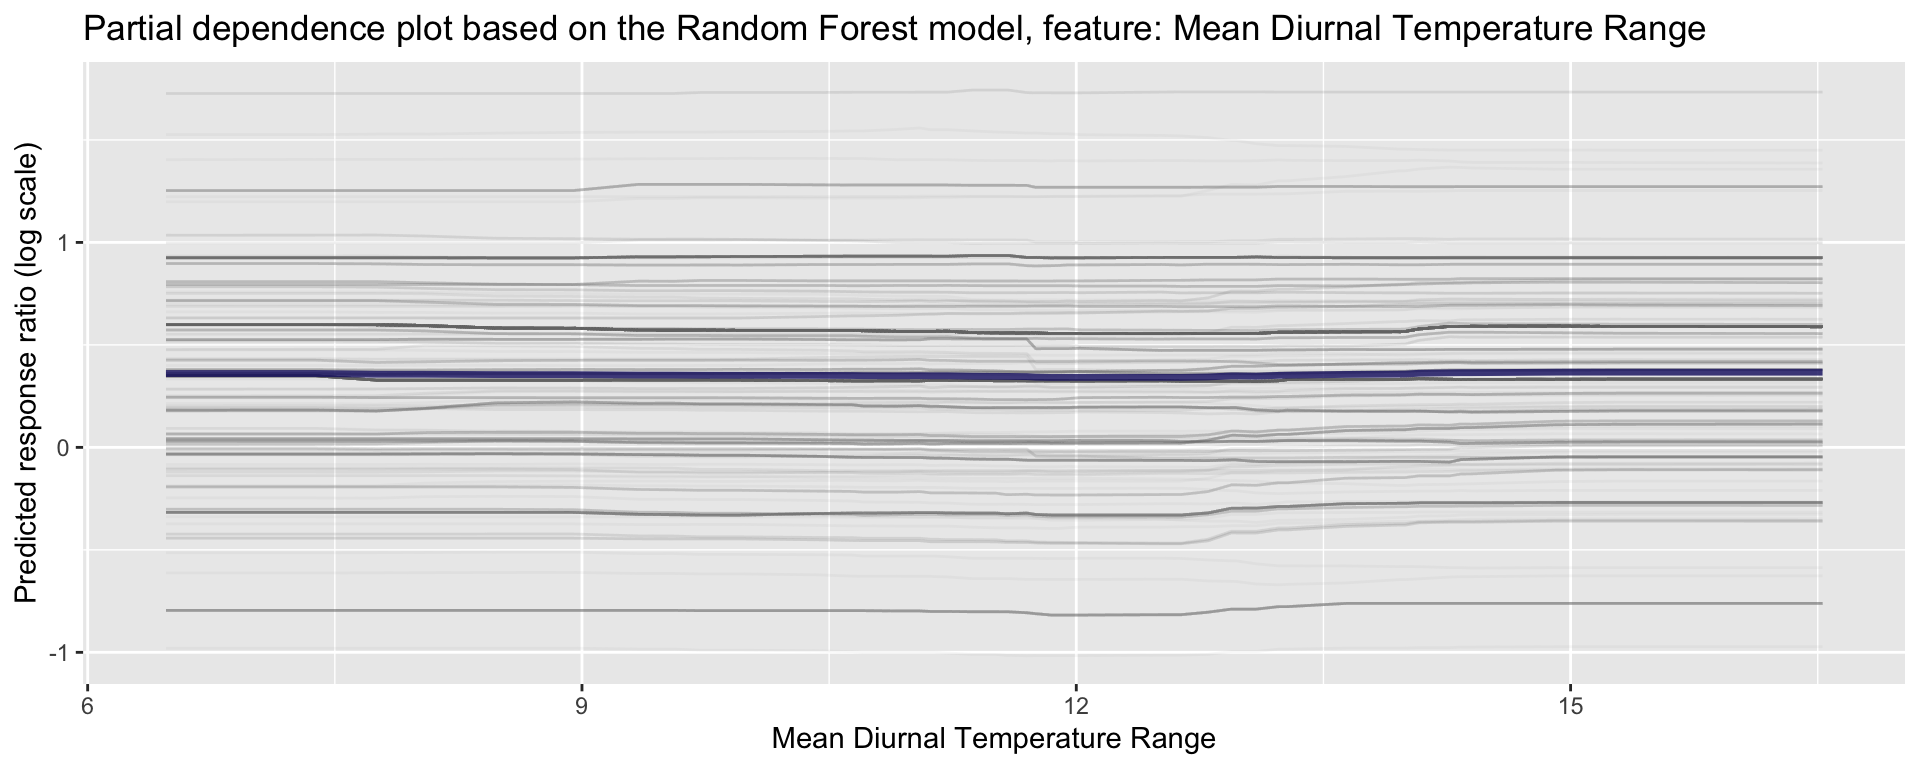 Partial dependence plot for Mean Diurnal Temperature Range